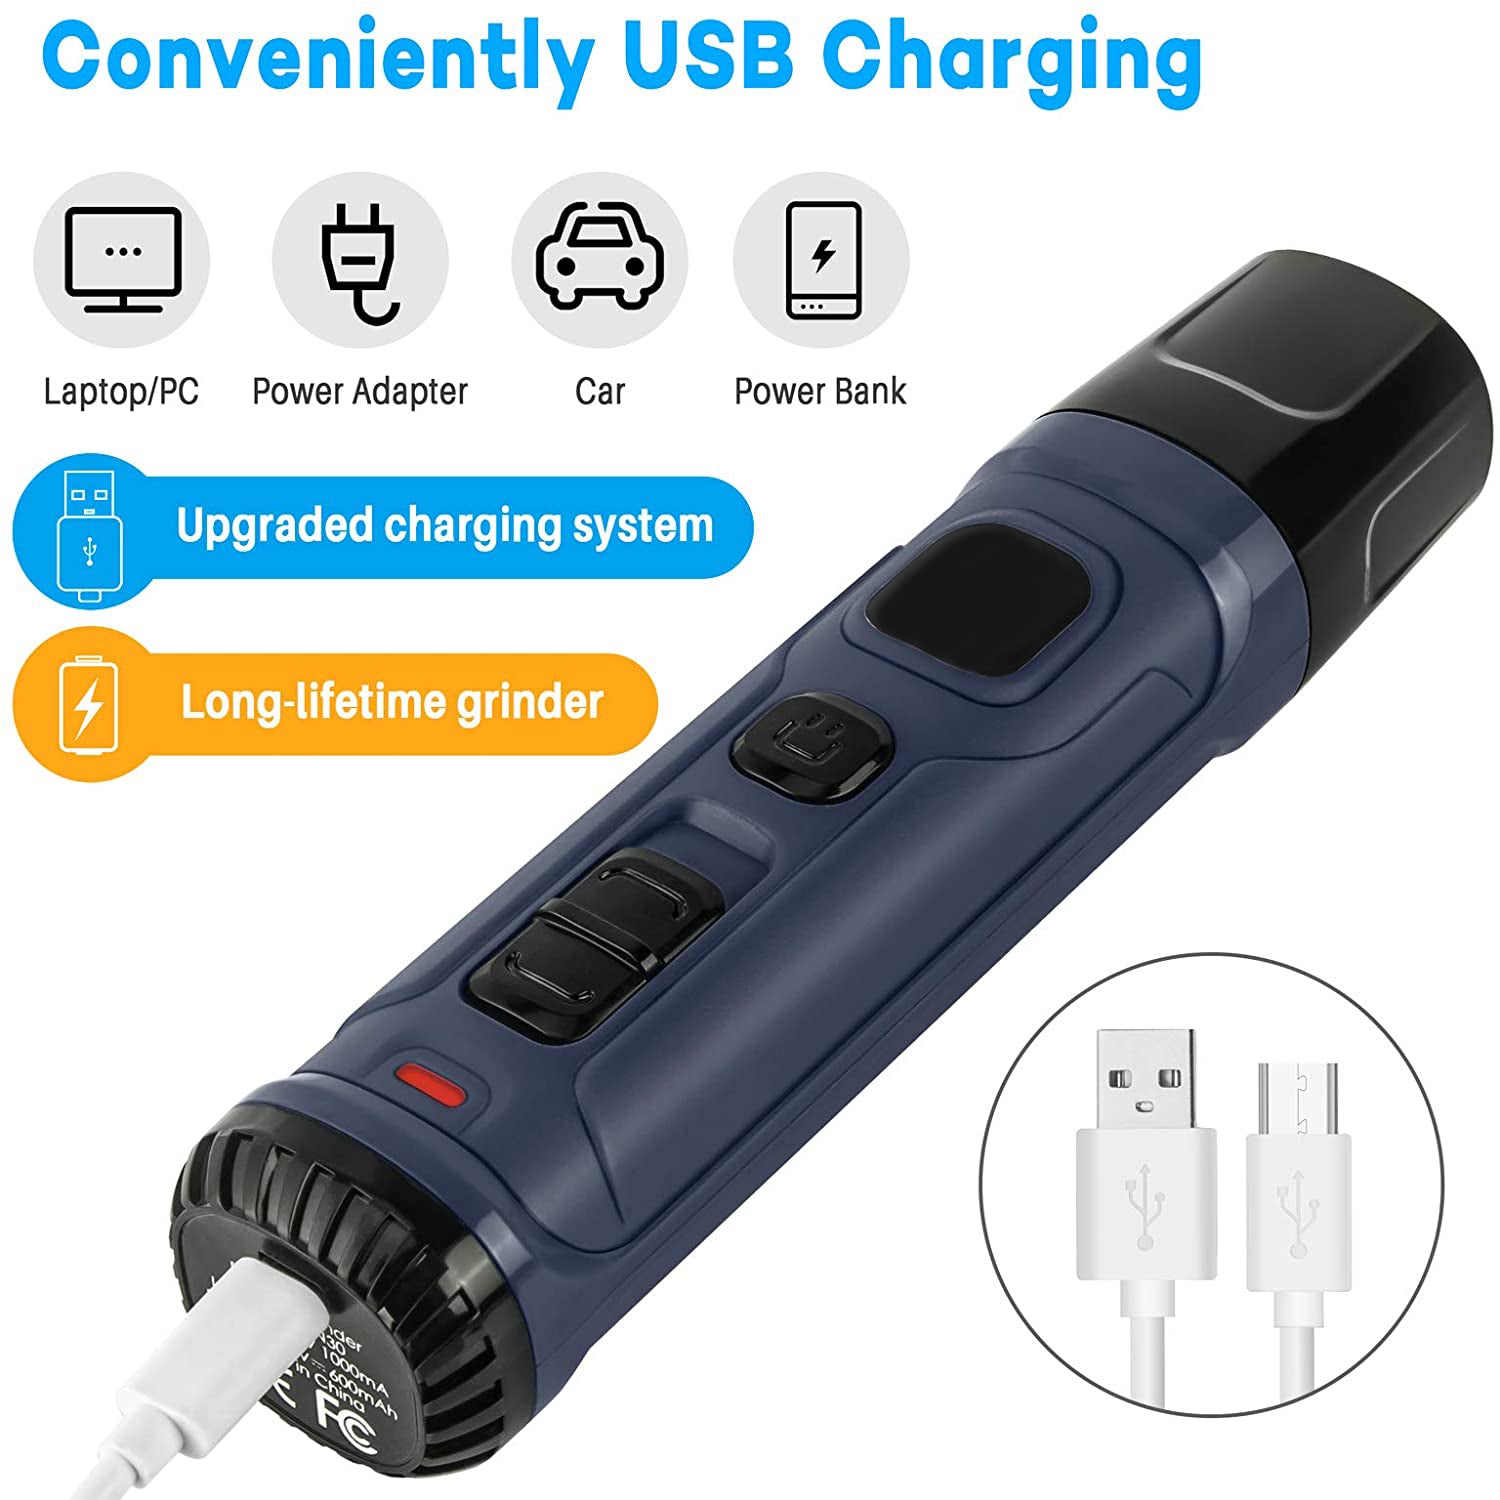 SmartpawLite Pet Nail Grinder Trimmer LED Model New Version - Convenient USB Charging and long-lasting